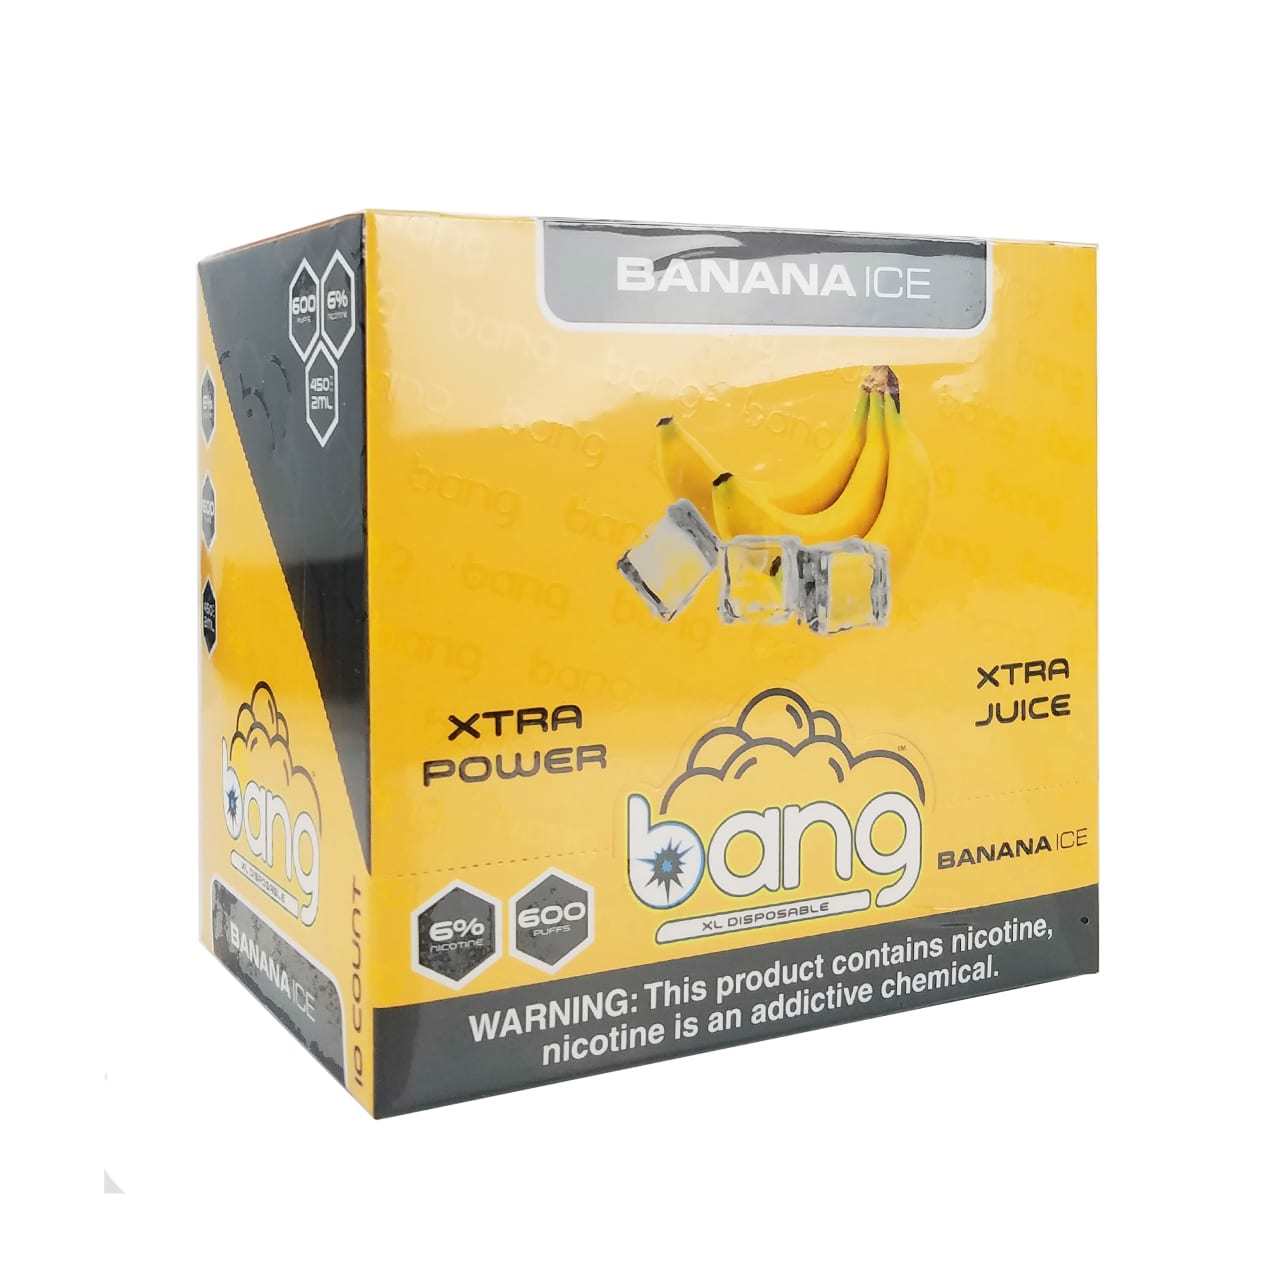 Bang XL descartável embalagem personalizada extra